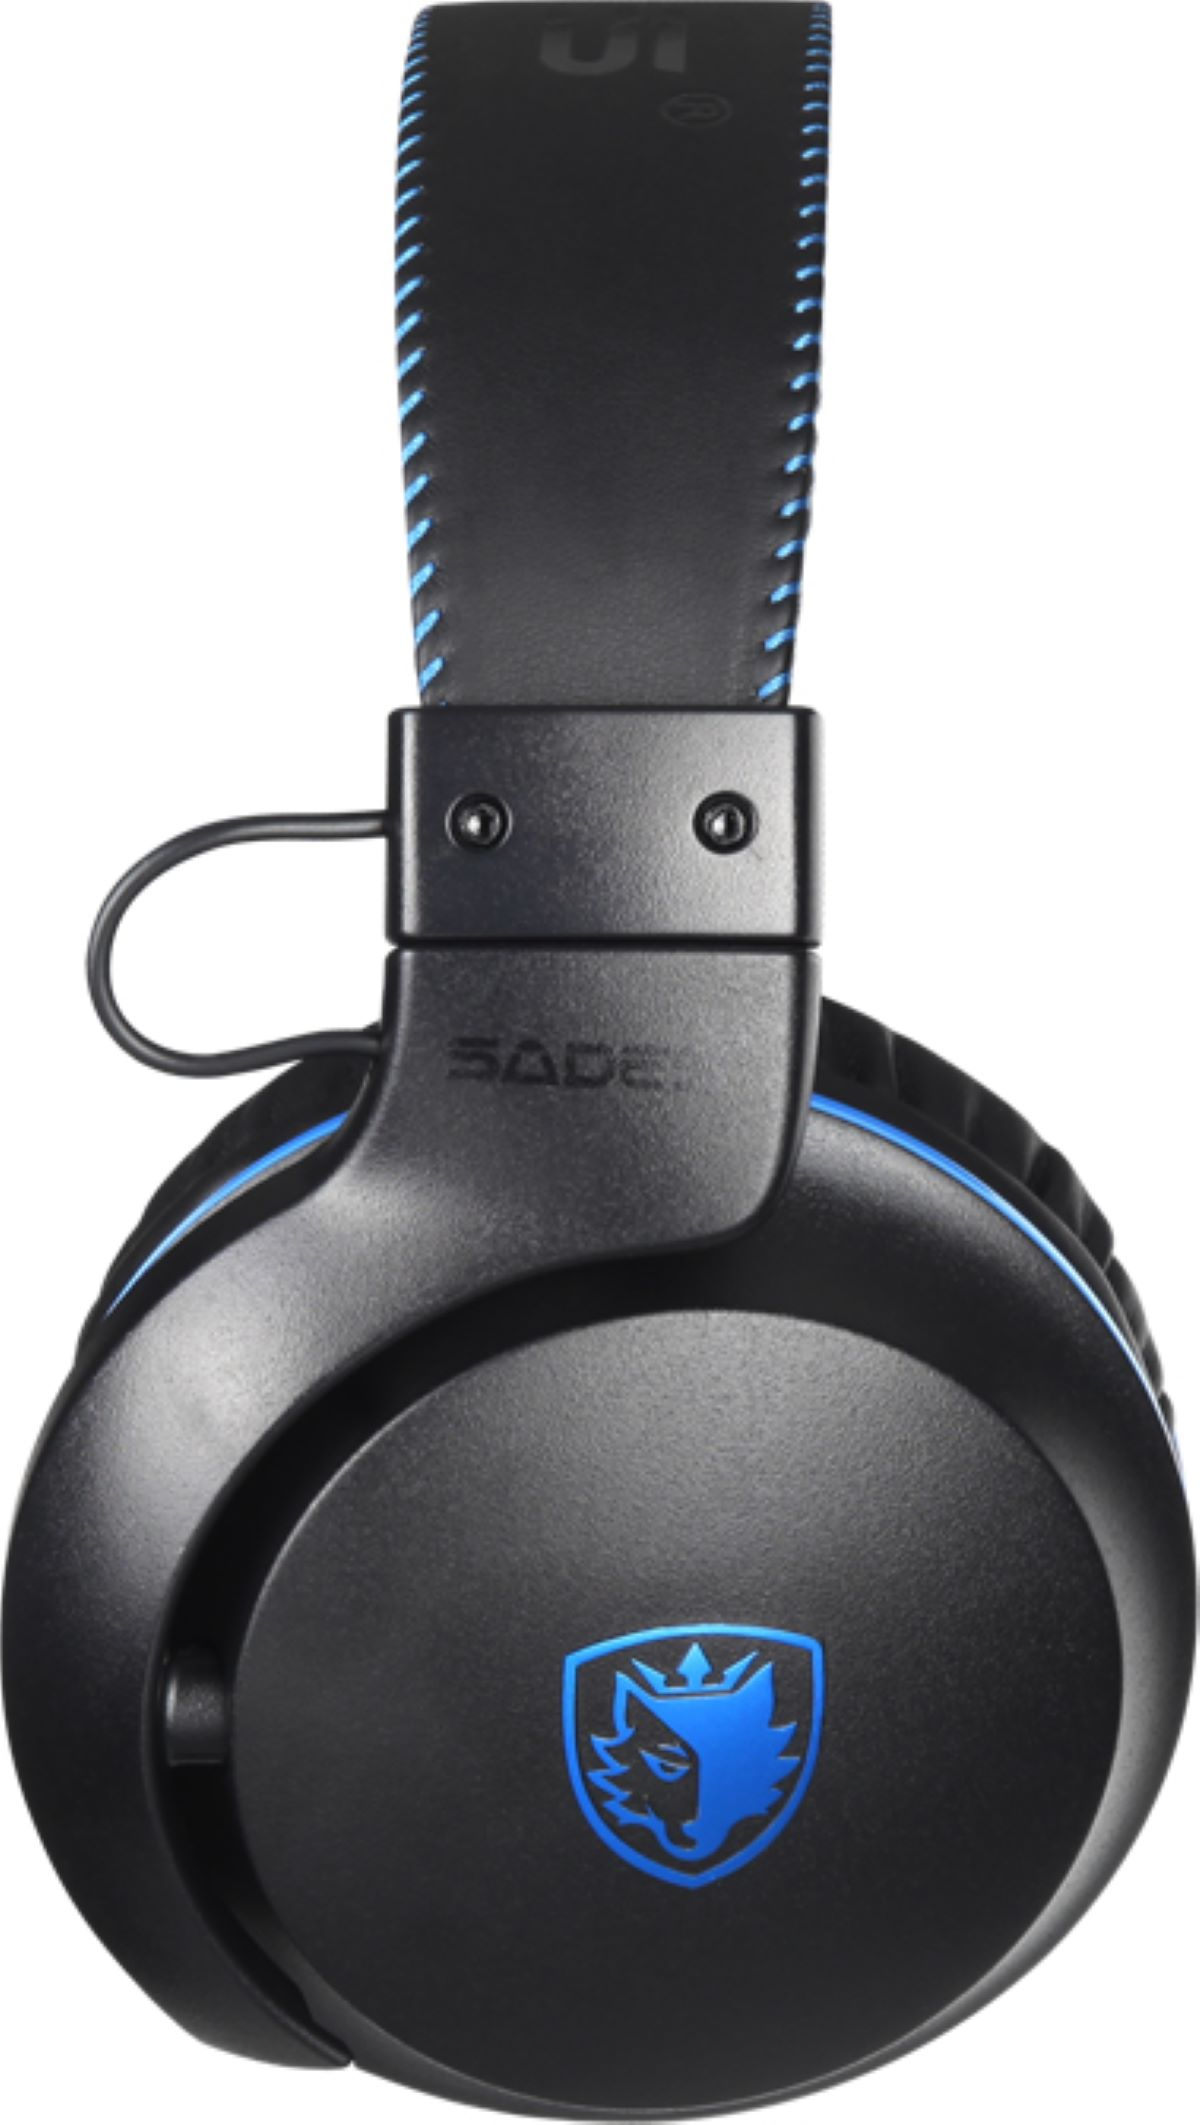 Fpower schwarz/blau SADES Over-ear Gaming-Headset SA-717,